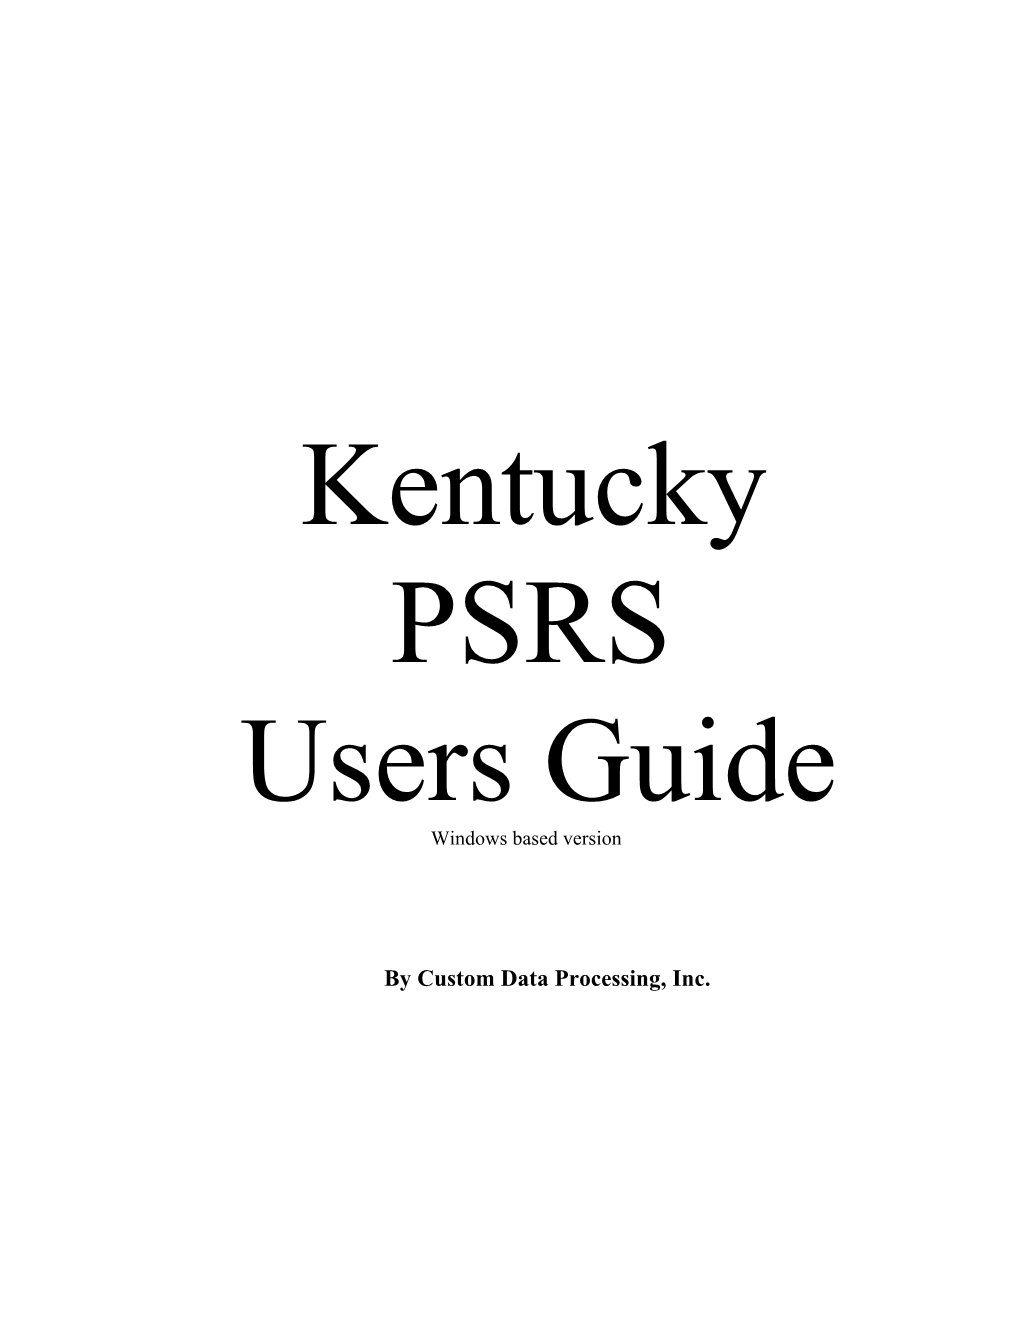 Documentation on Custom Data Processing S Kentucky Environmental Gui System